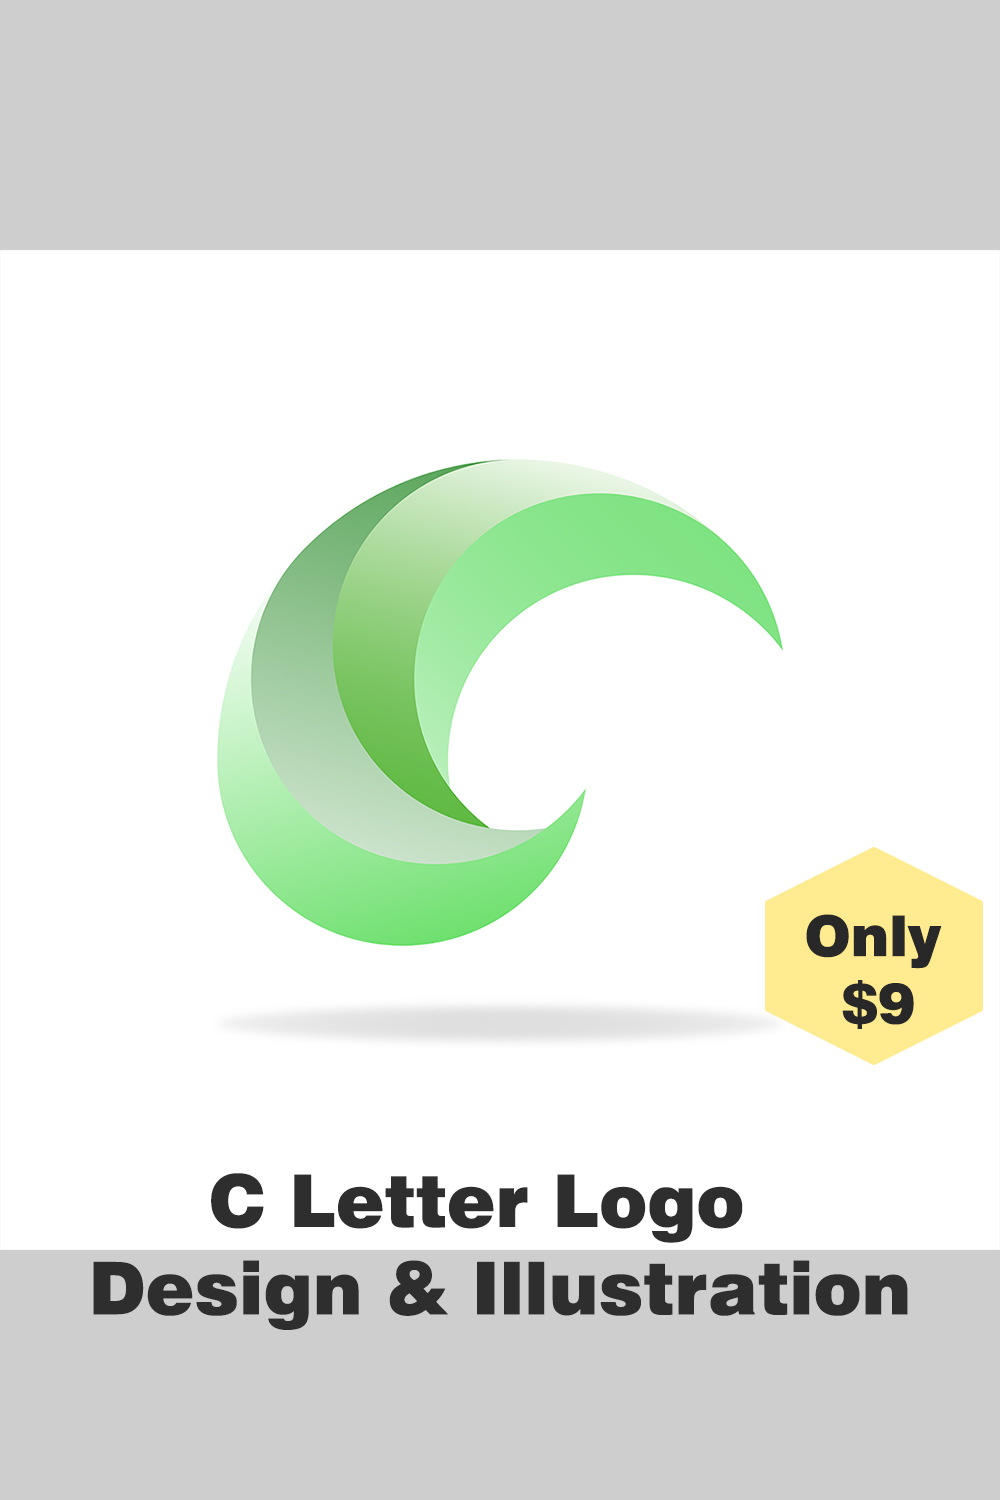 C Letter Logo Design and Illustration pinterest image.